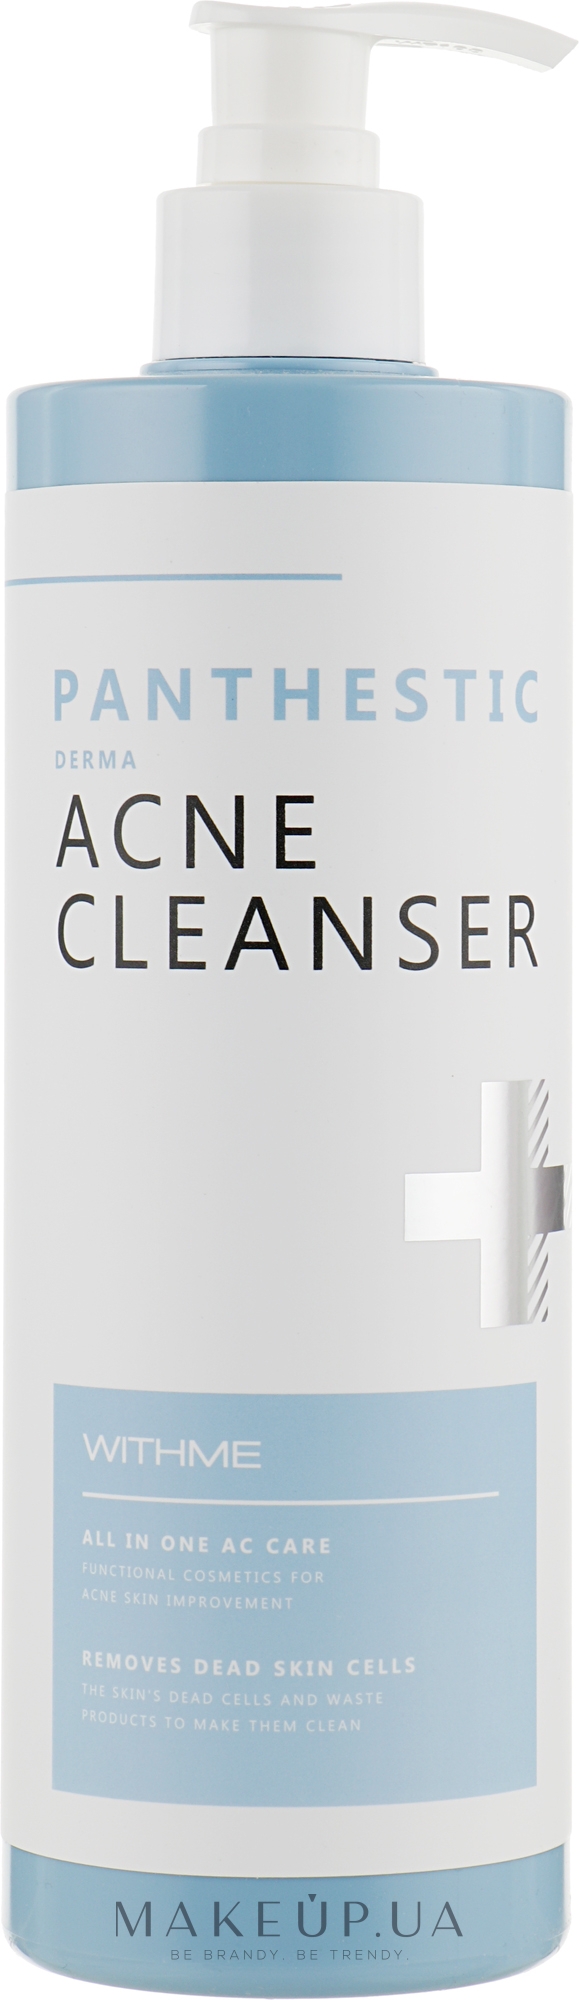 Очищающий гель против акне - Panthestic Derma Acne Cleanser — фото 500ml